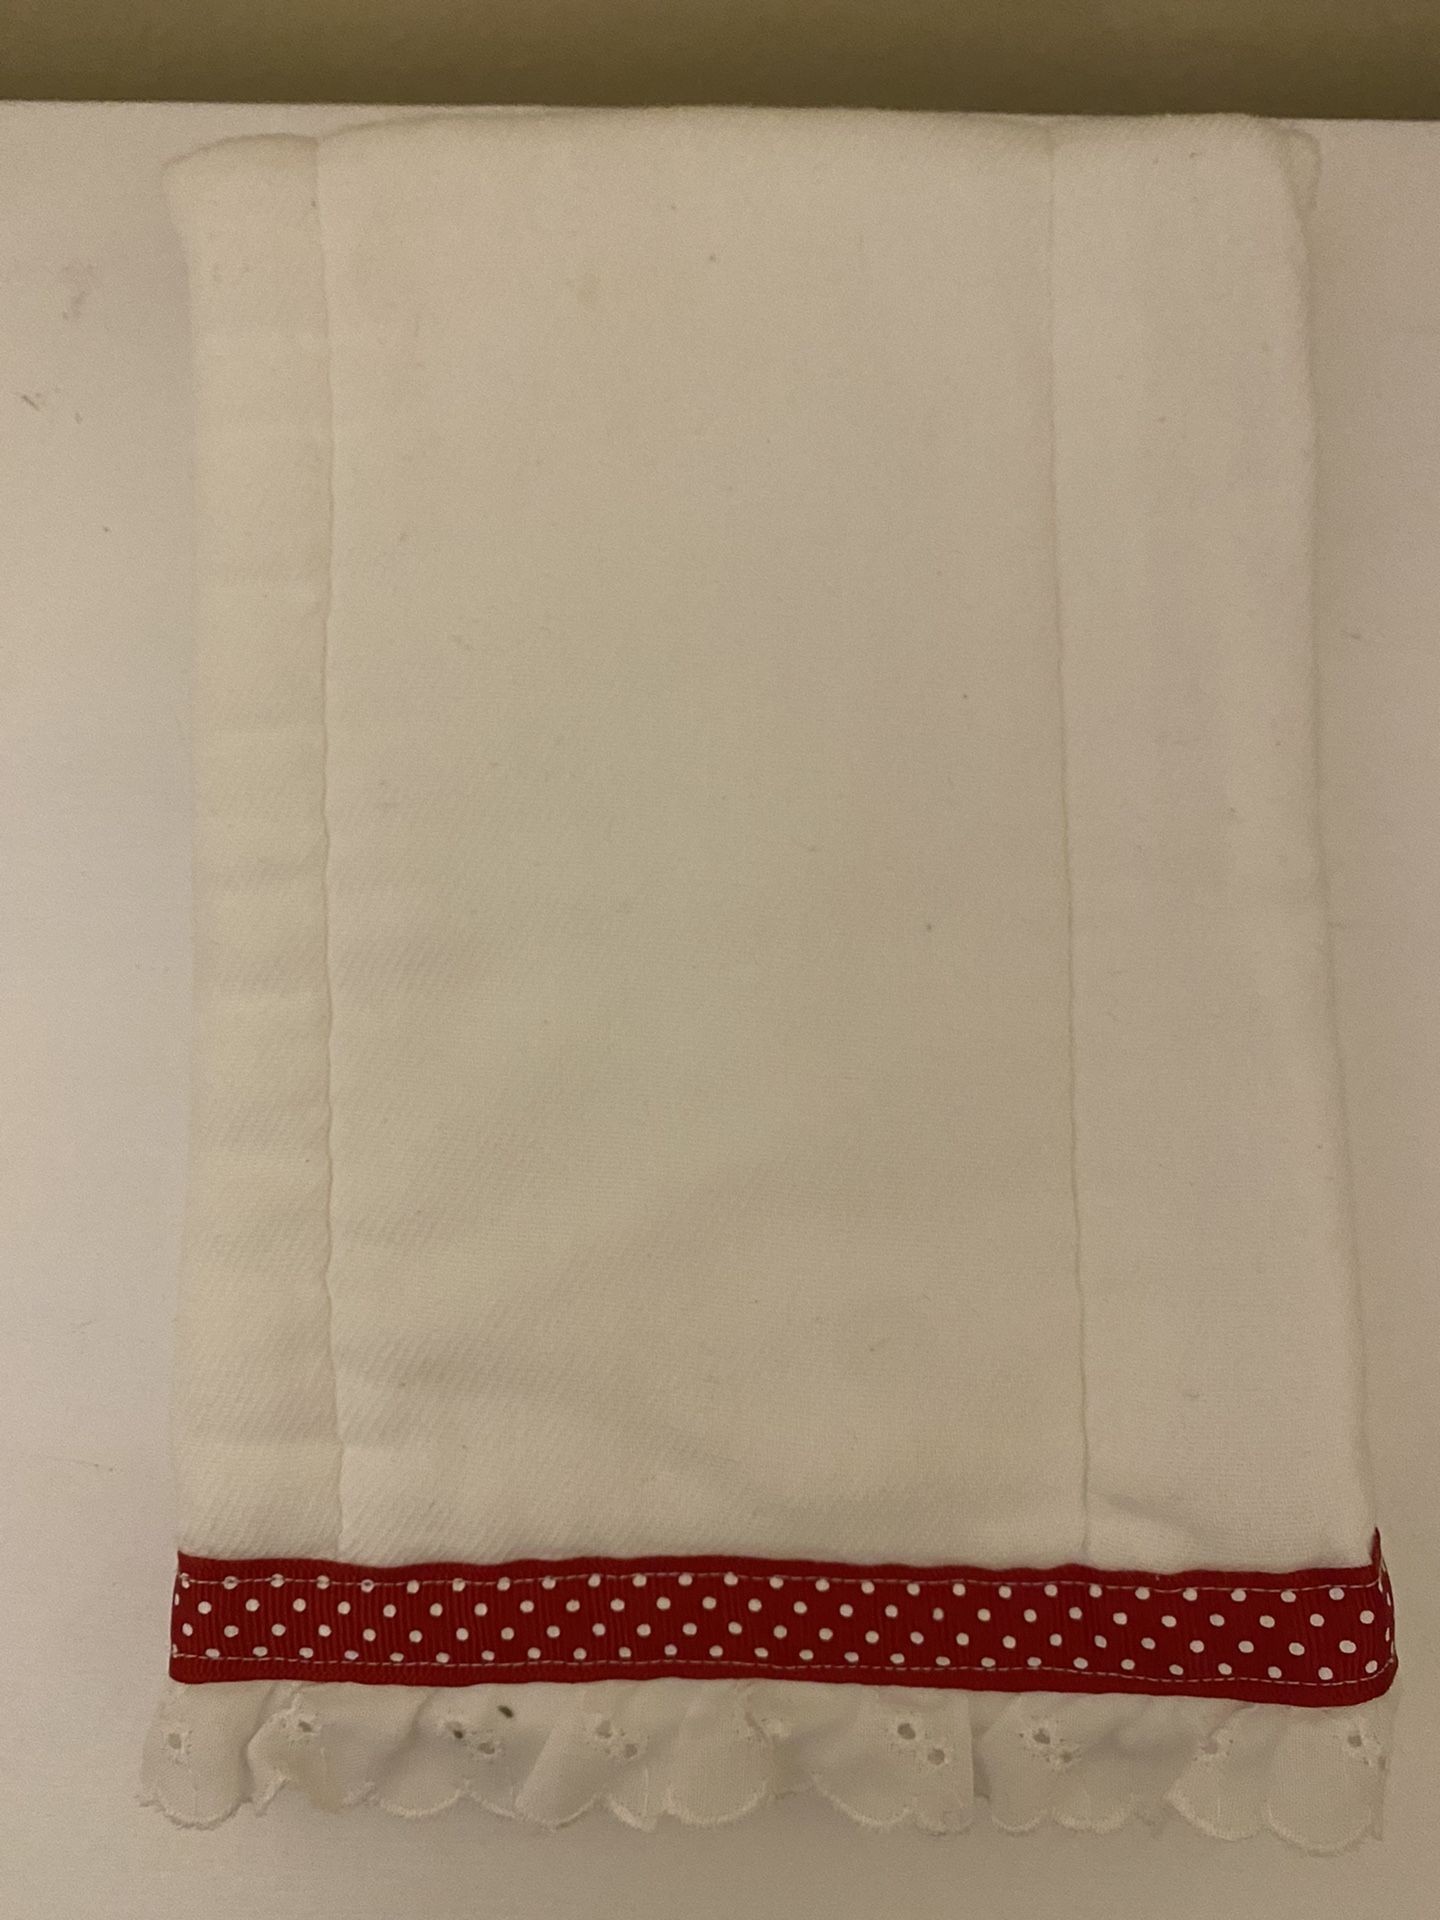 Baby burp cloth with red polka dot ribbon